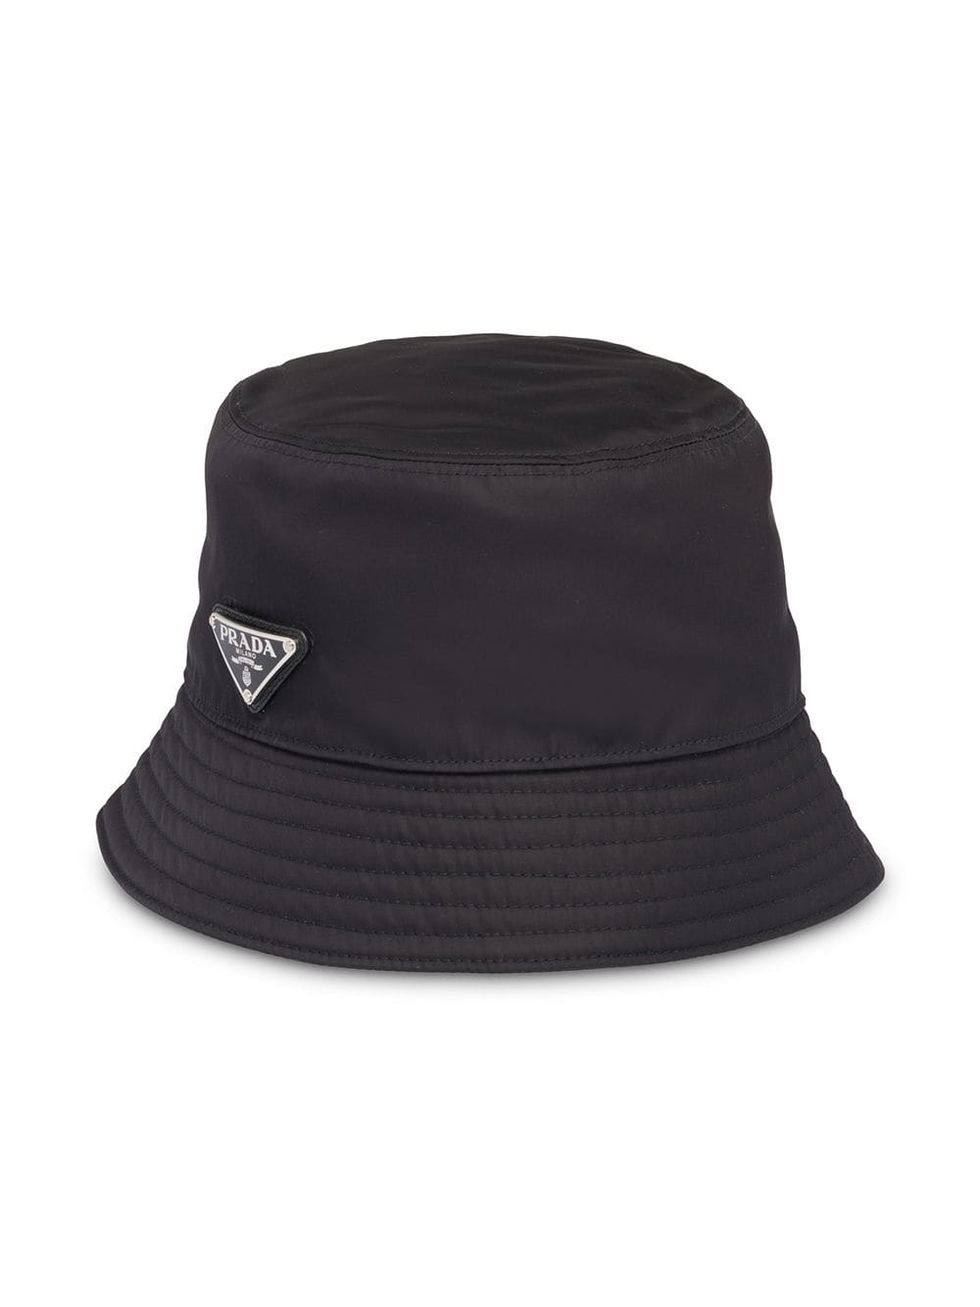 Prada標誌黑色漁夫帽